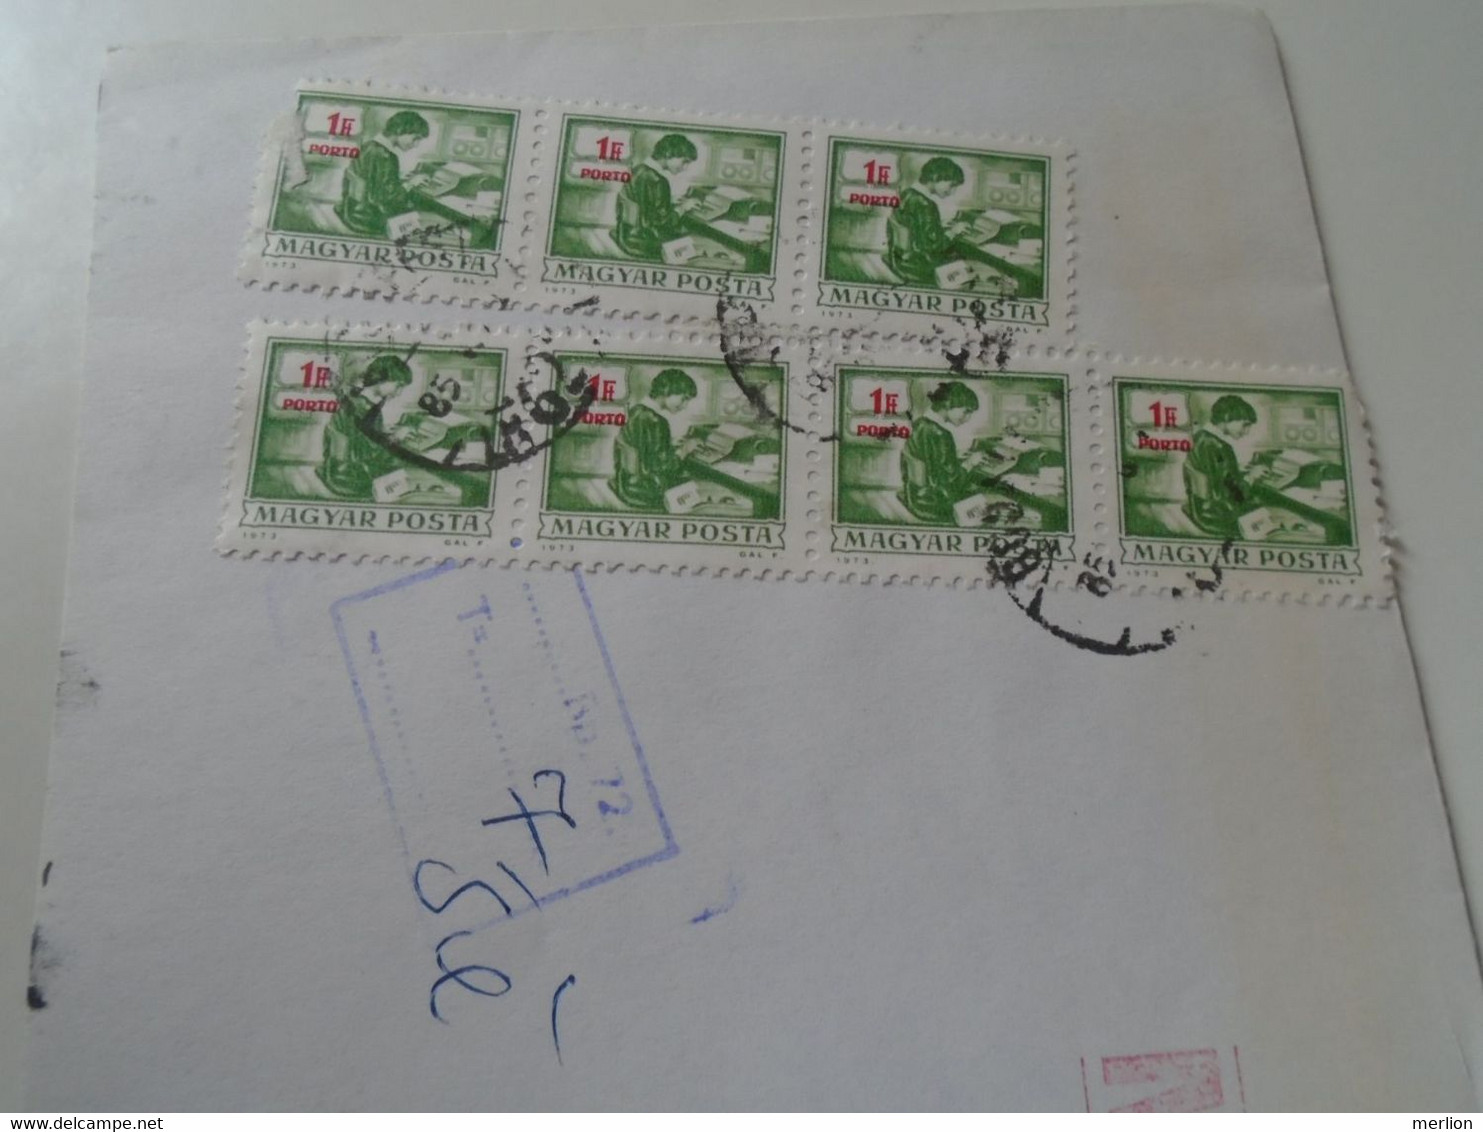 ZA401.8   Switzerland Suisse -cancel 1985ZÜRICH   .  - Ema -red Meter Postage Due - Porto  Hungary - Affranchissements Mécaniques